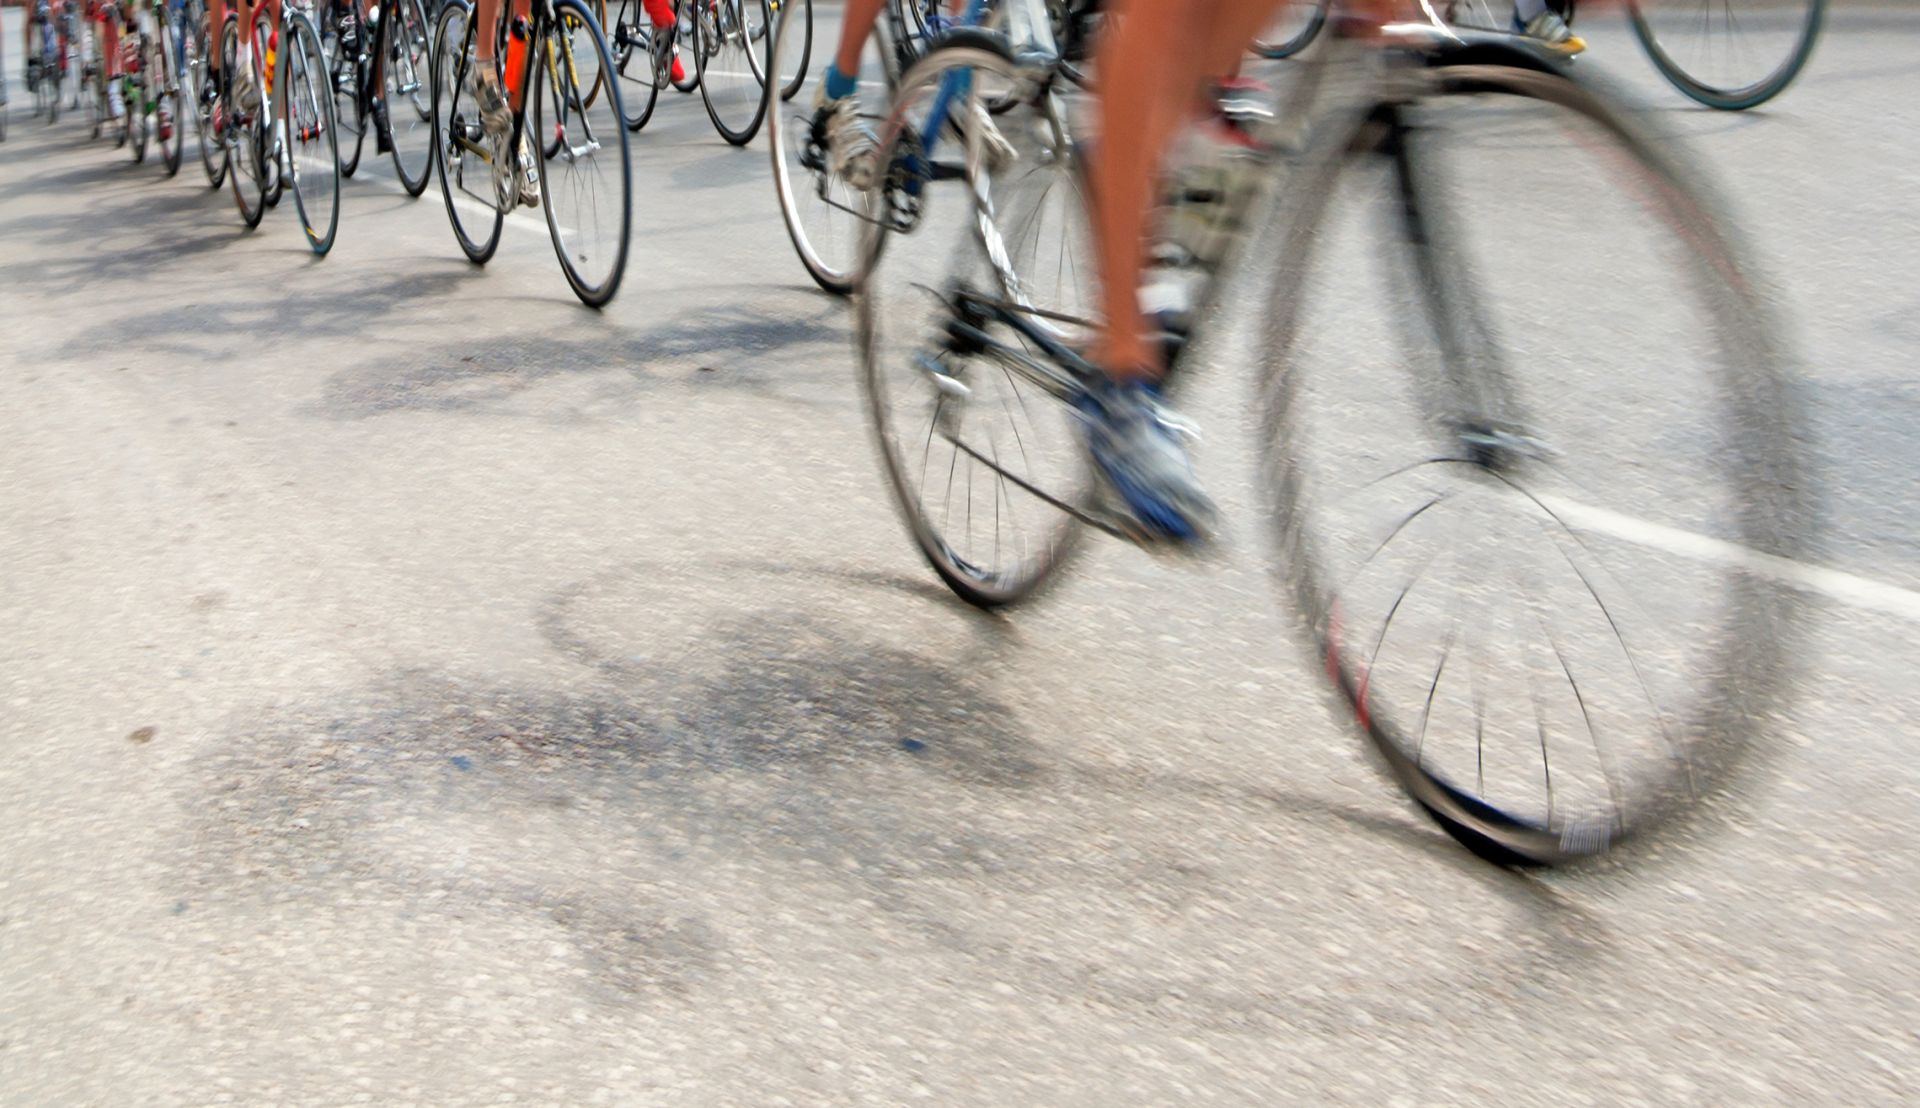 Projeto “Pedalar pelo Município” promove passeio ciclístico neste domingo, 25